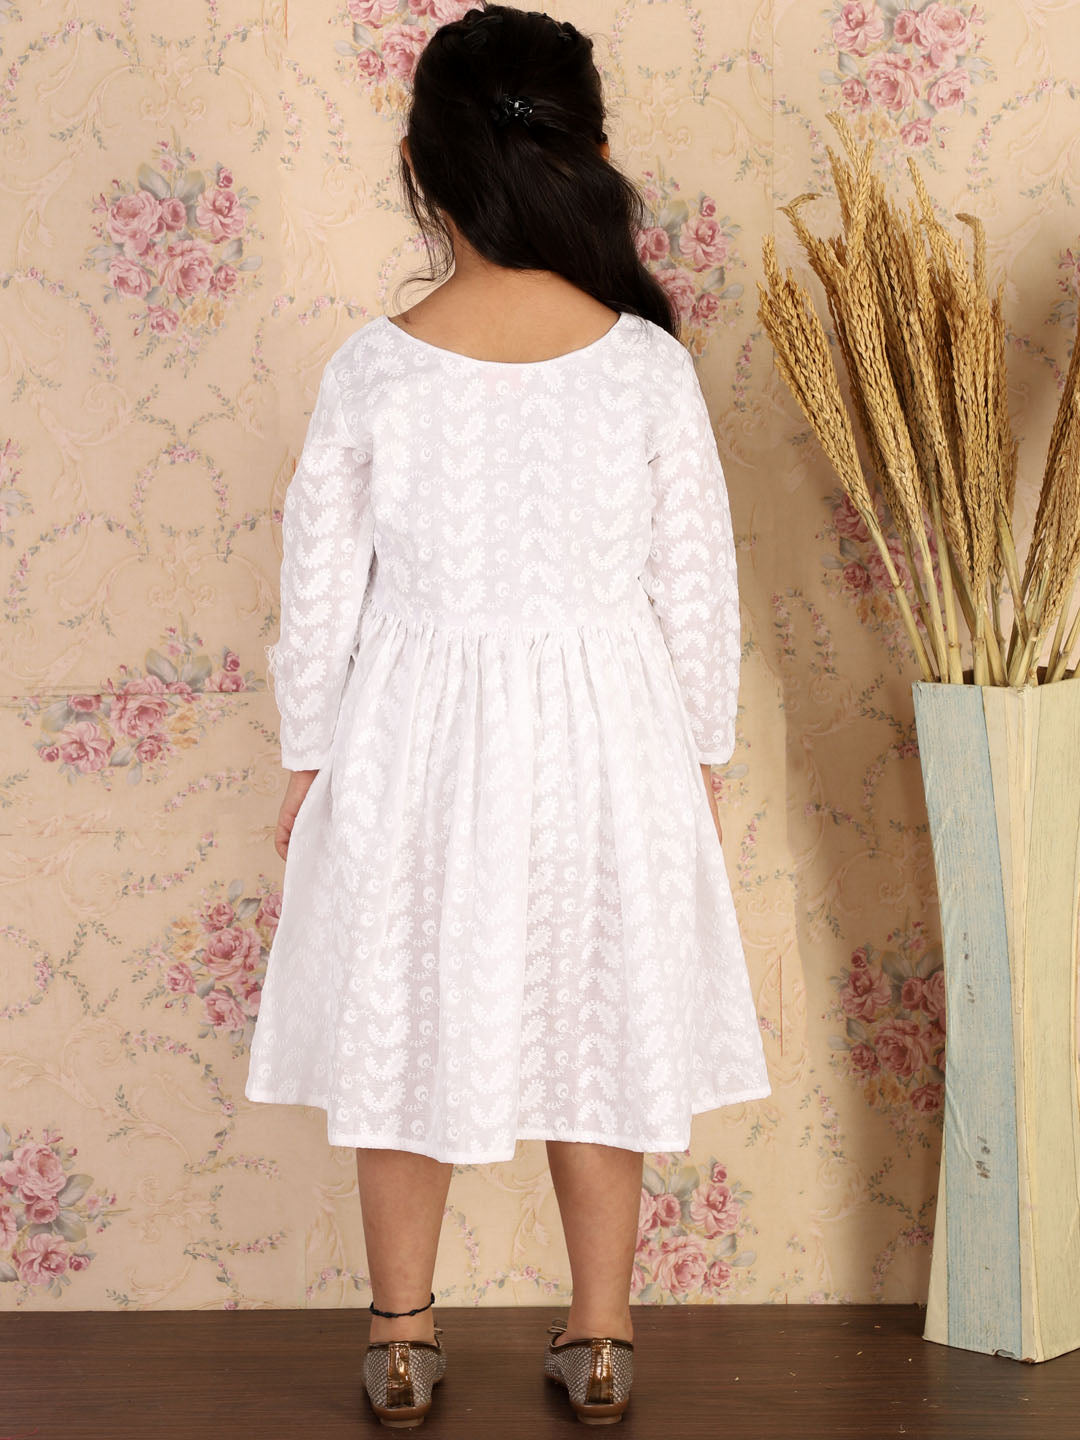 Ethnic fashion online - Blended Cotton Dresses